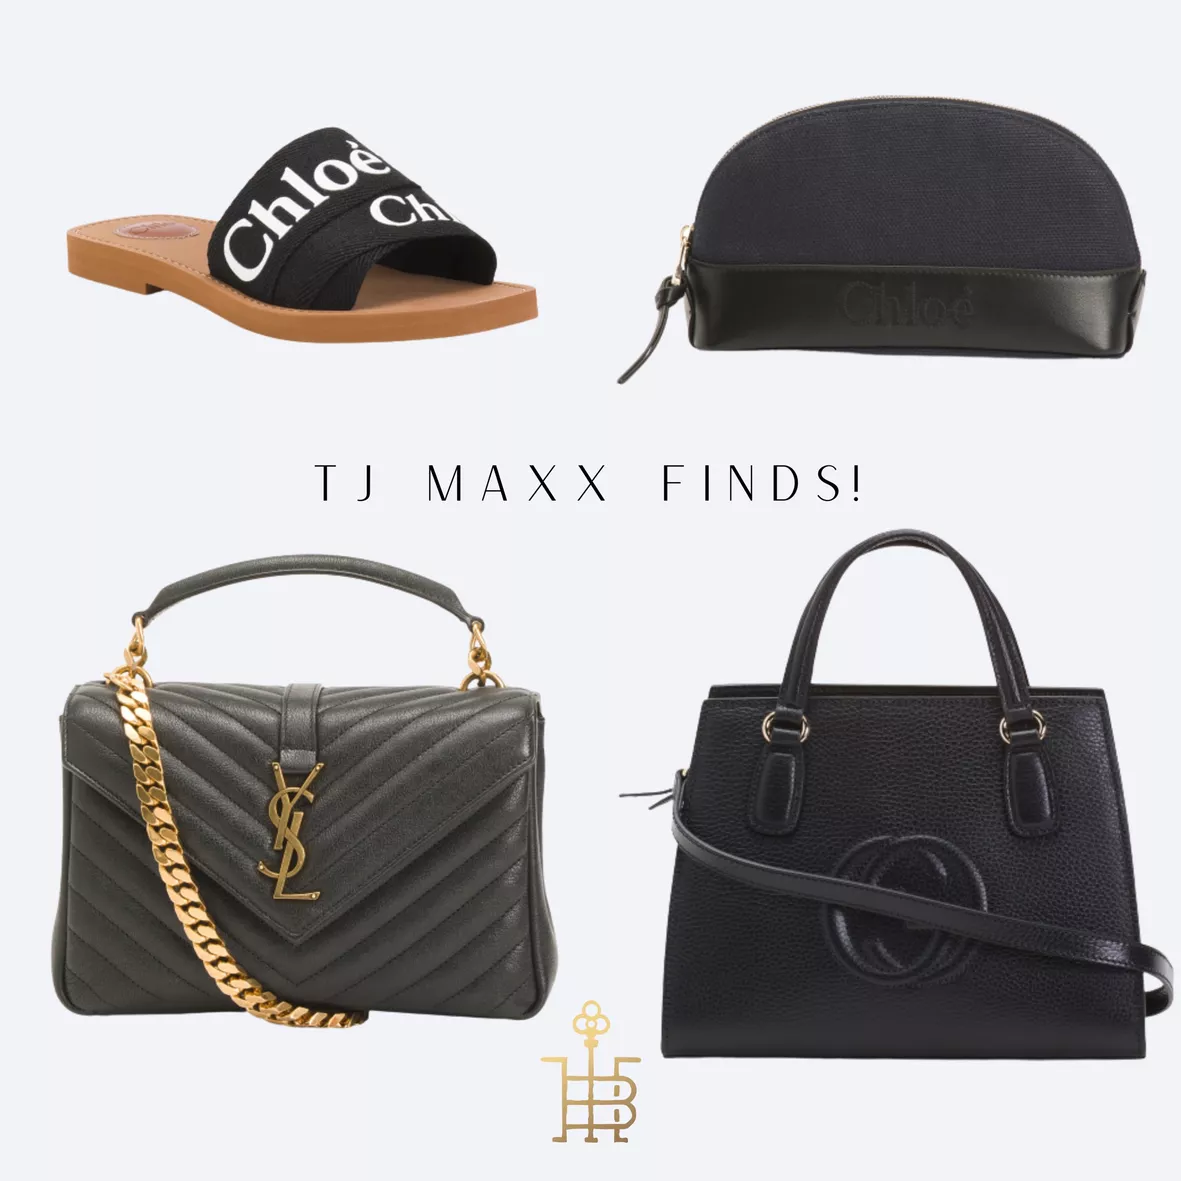 Gucci And YSL Bags At TJMaxx